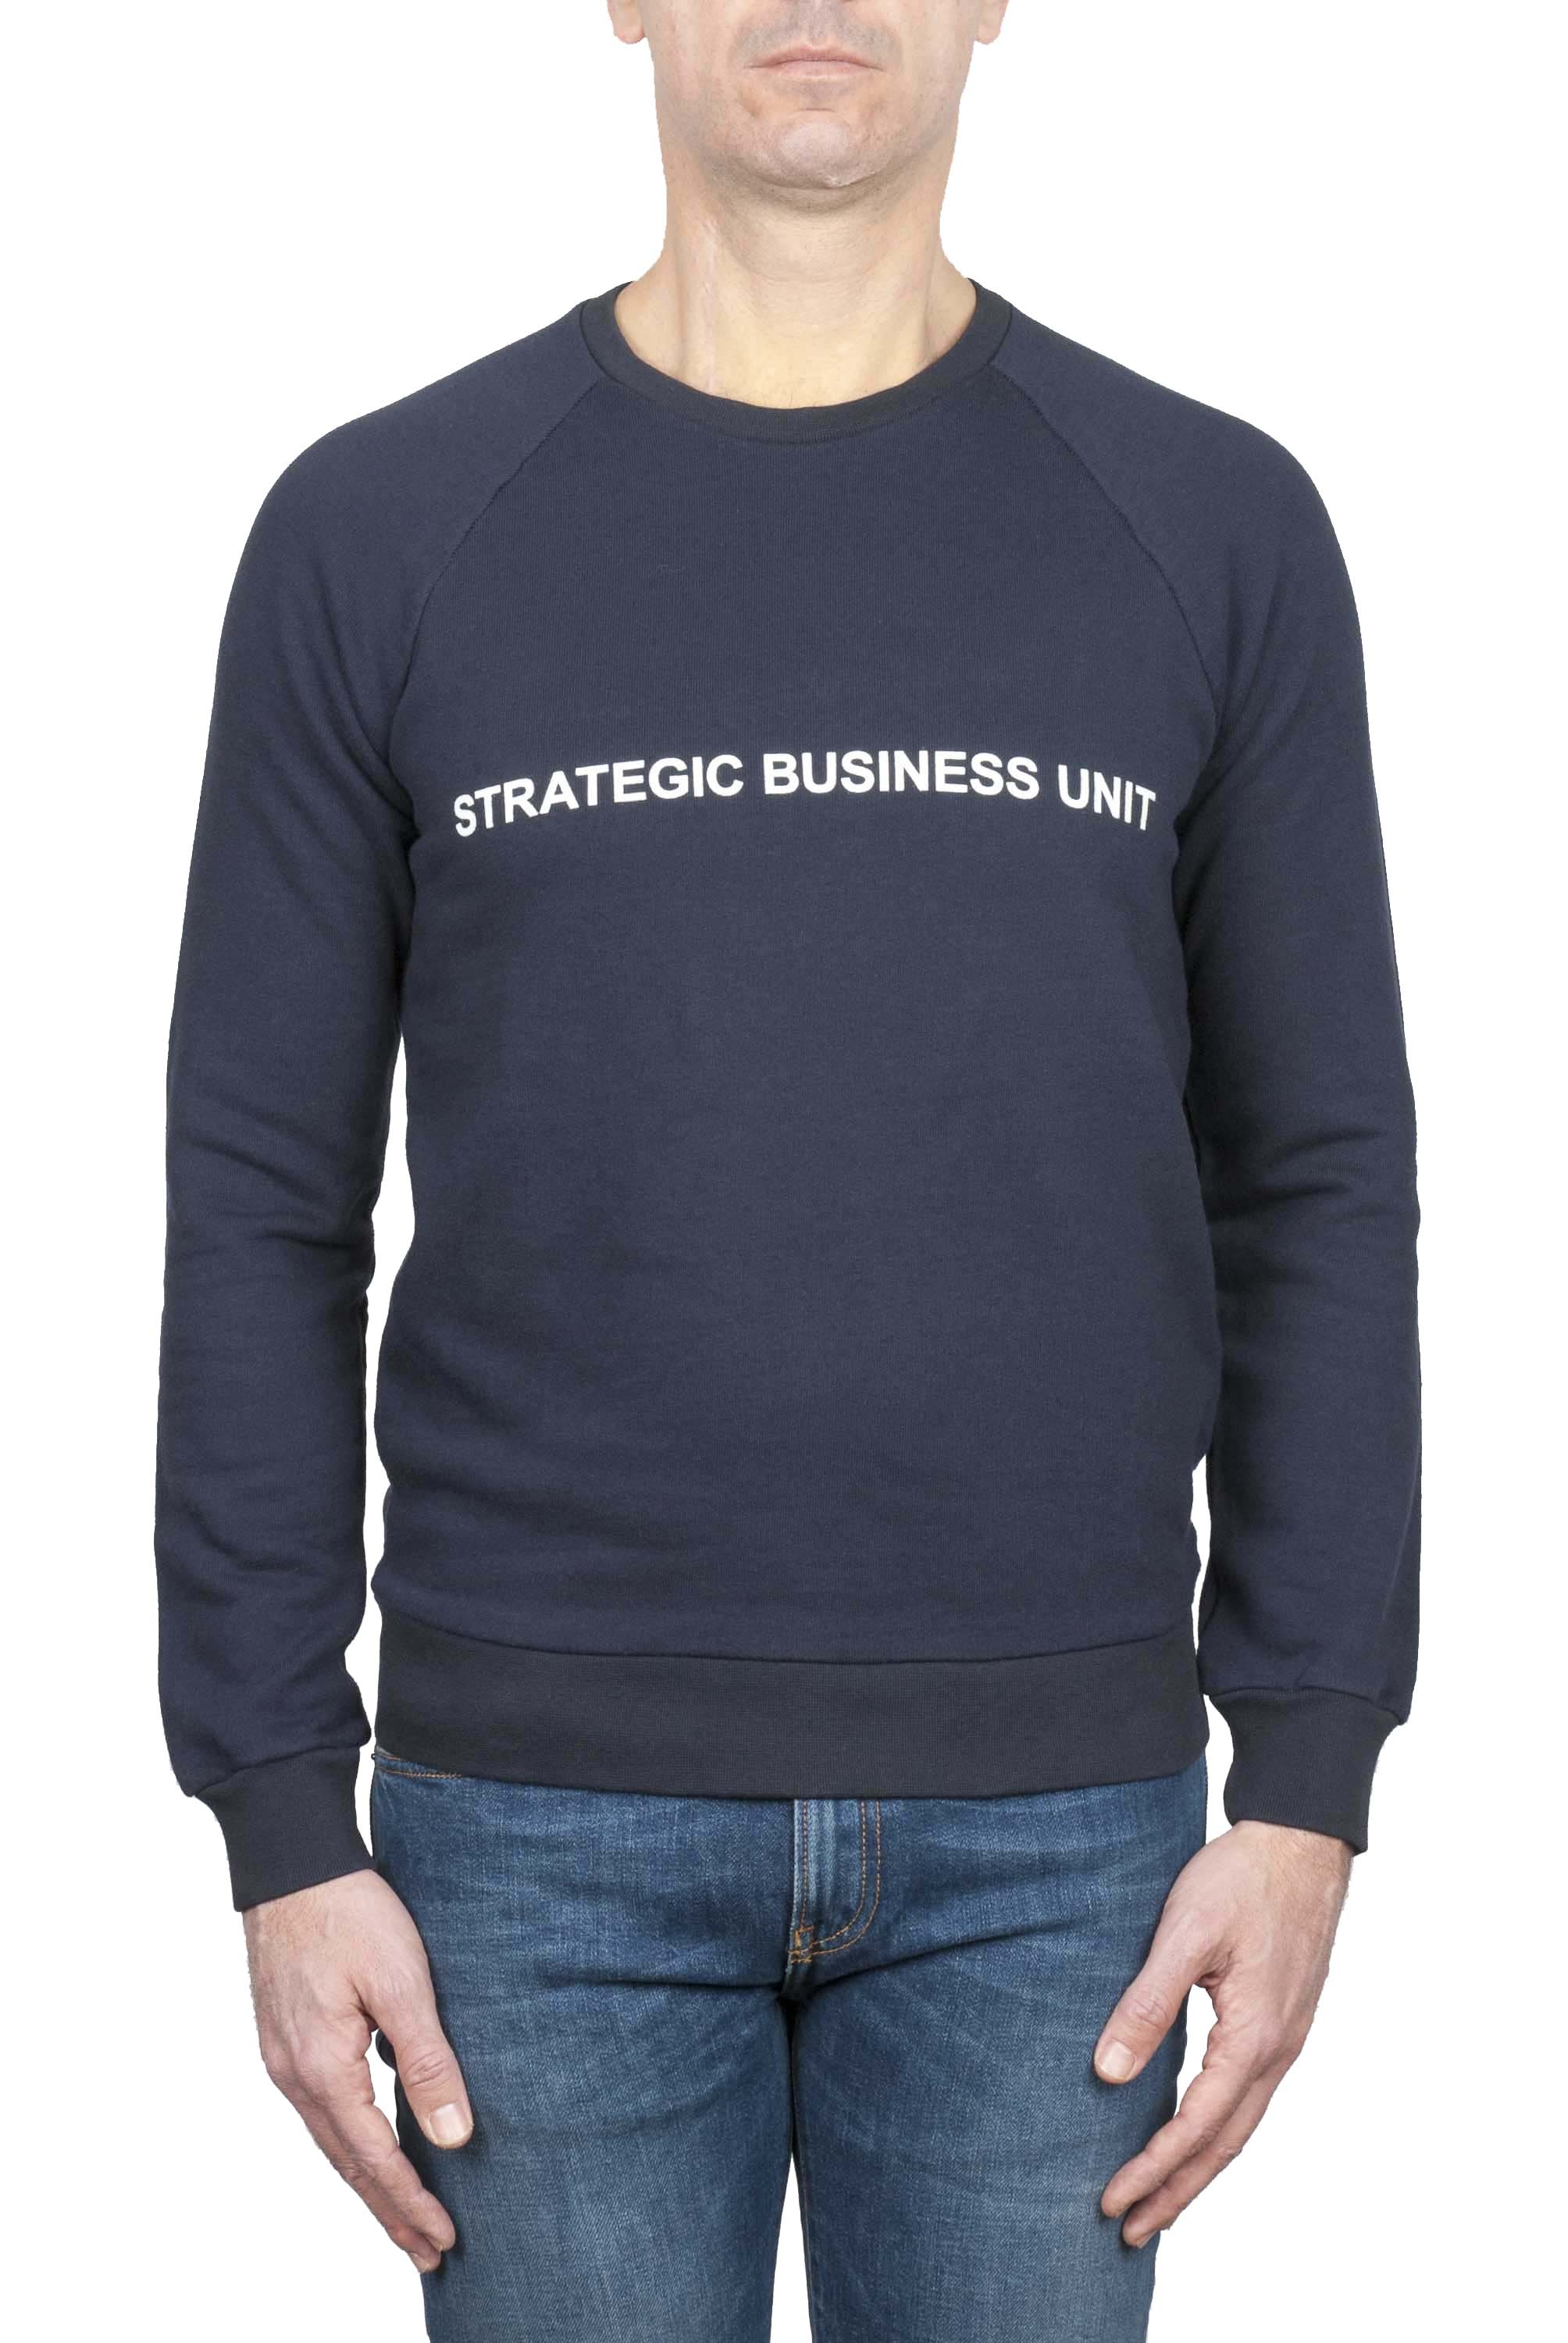 SBU 01466_19AW Strategic Business Unit logo printed crewneck sweatshirt 01